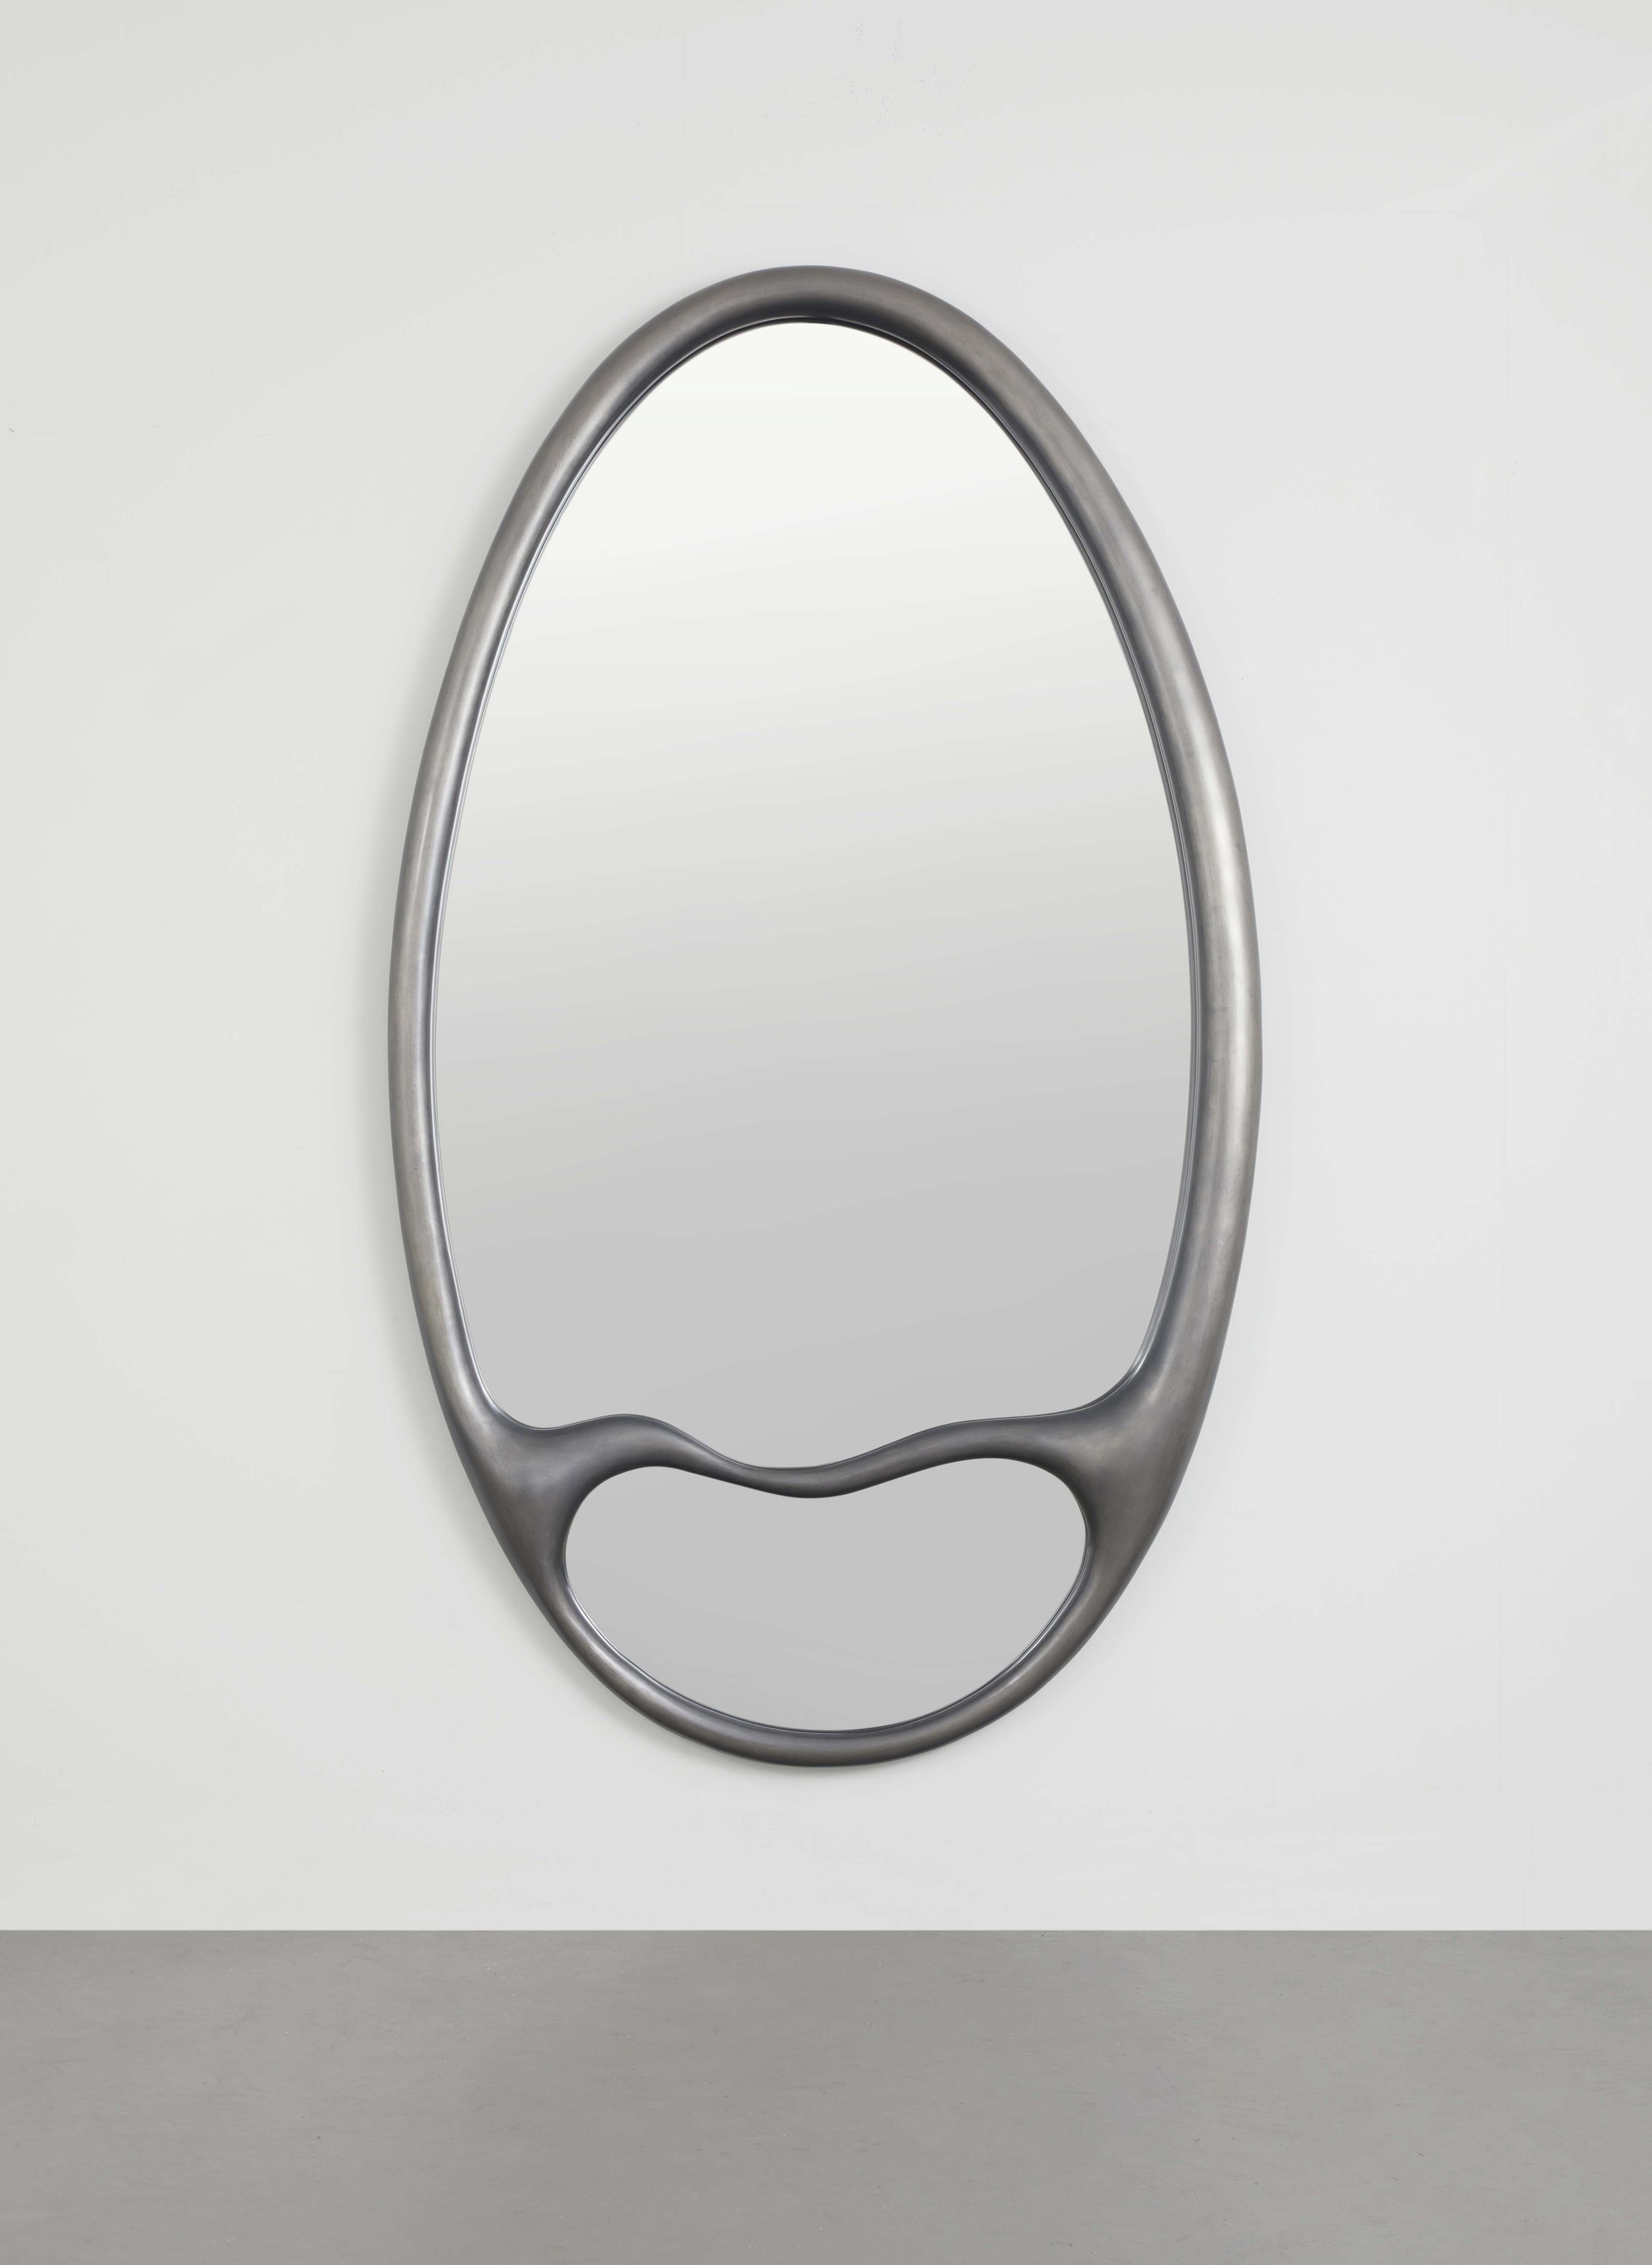 1.MB Mirror 'Oval'.jpg